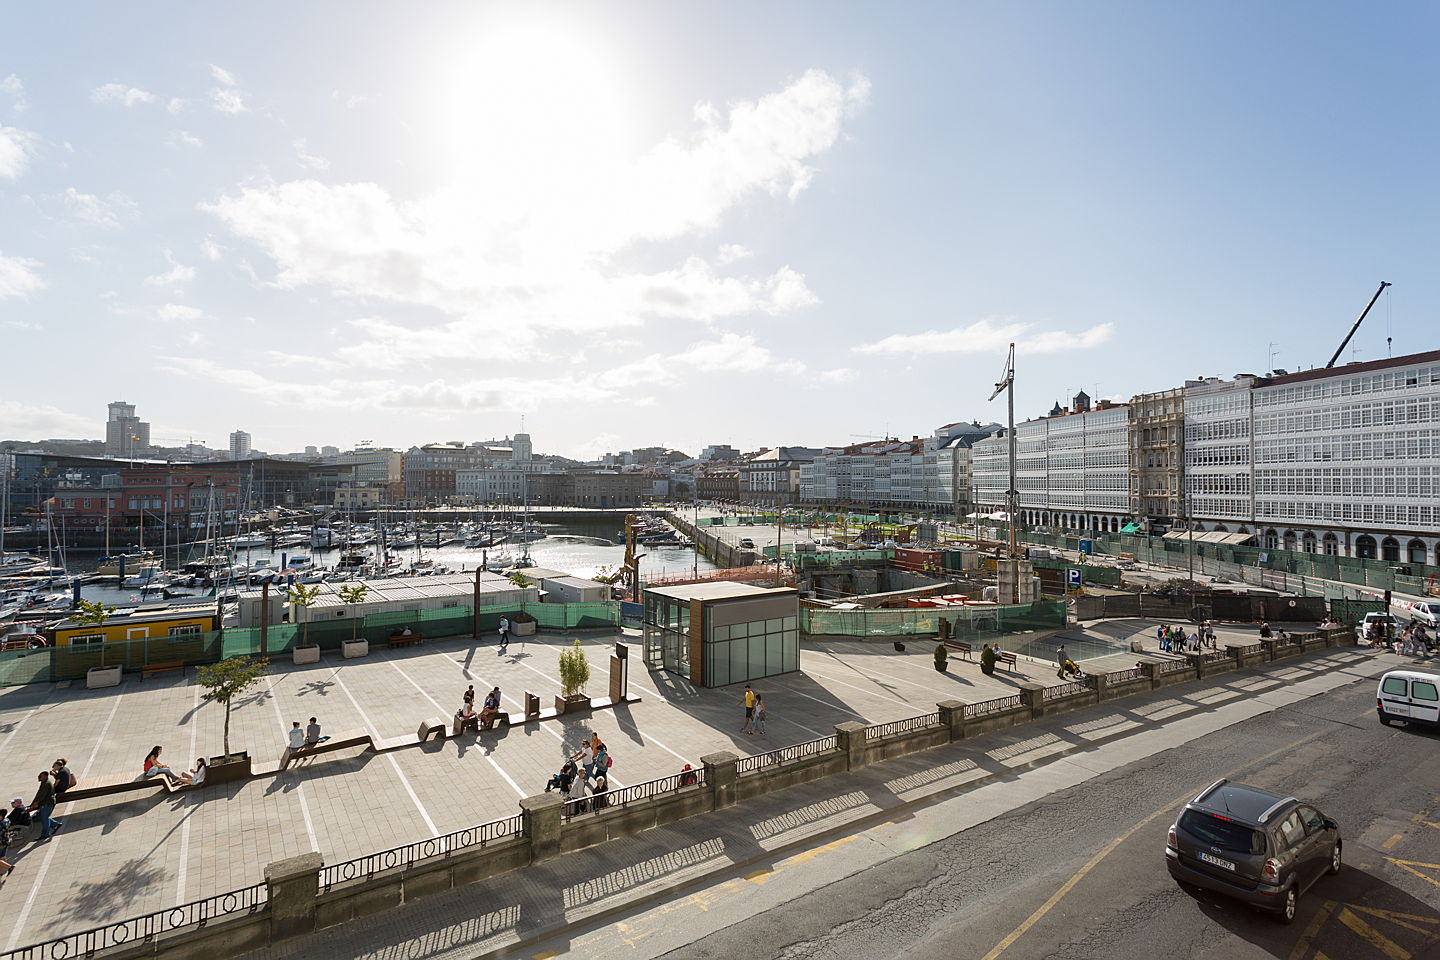  La Coruña, España
- _MG_6586.jpg